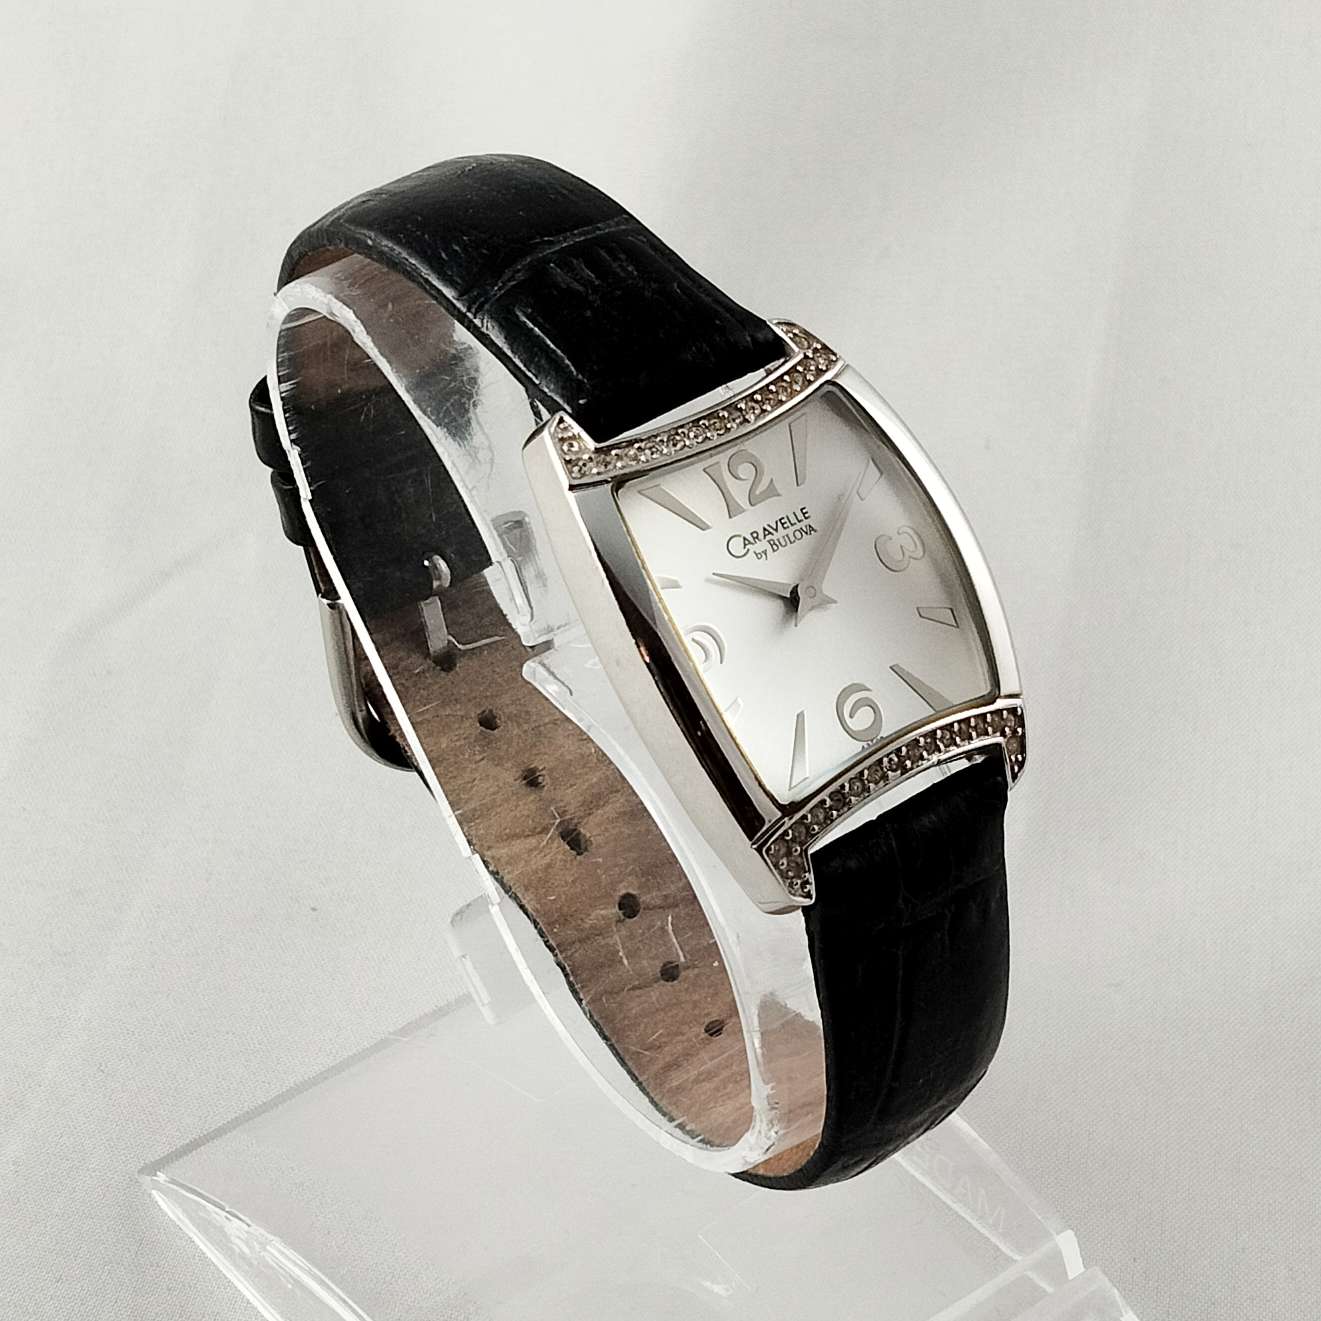 Carvelle by Bulova Watch, Jewel Details, Black Leather Strap